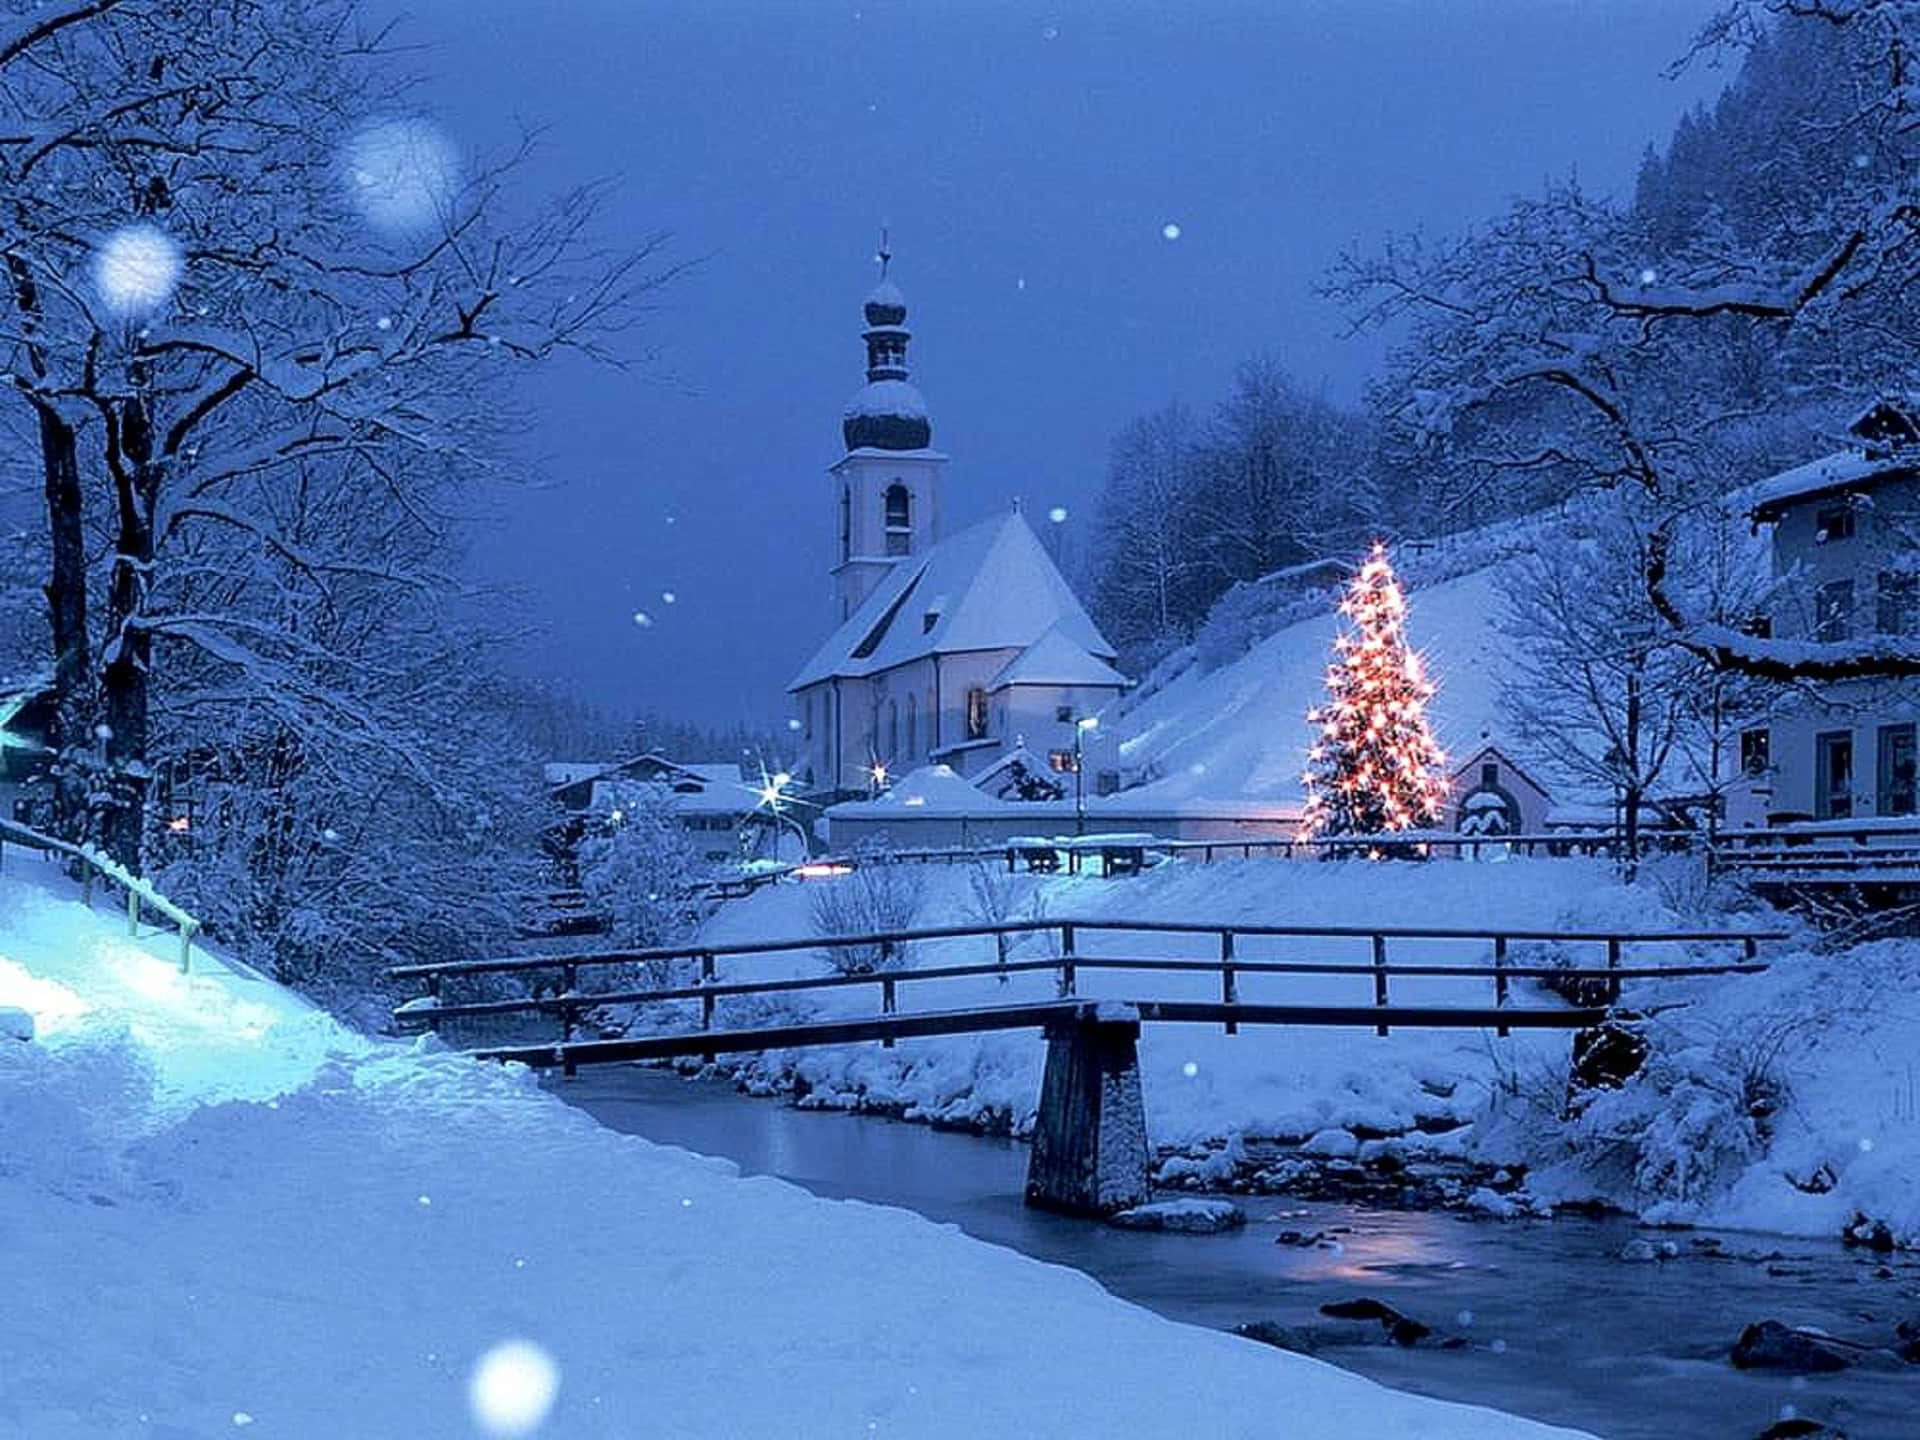 Enchanting Snowy Village in Winter Wonderland Wallpaper